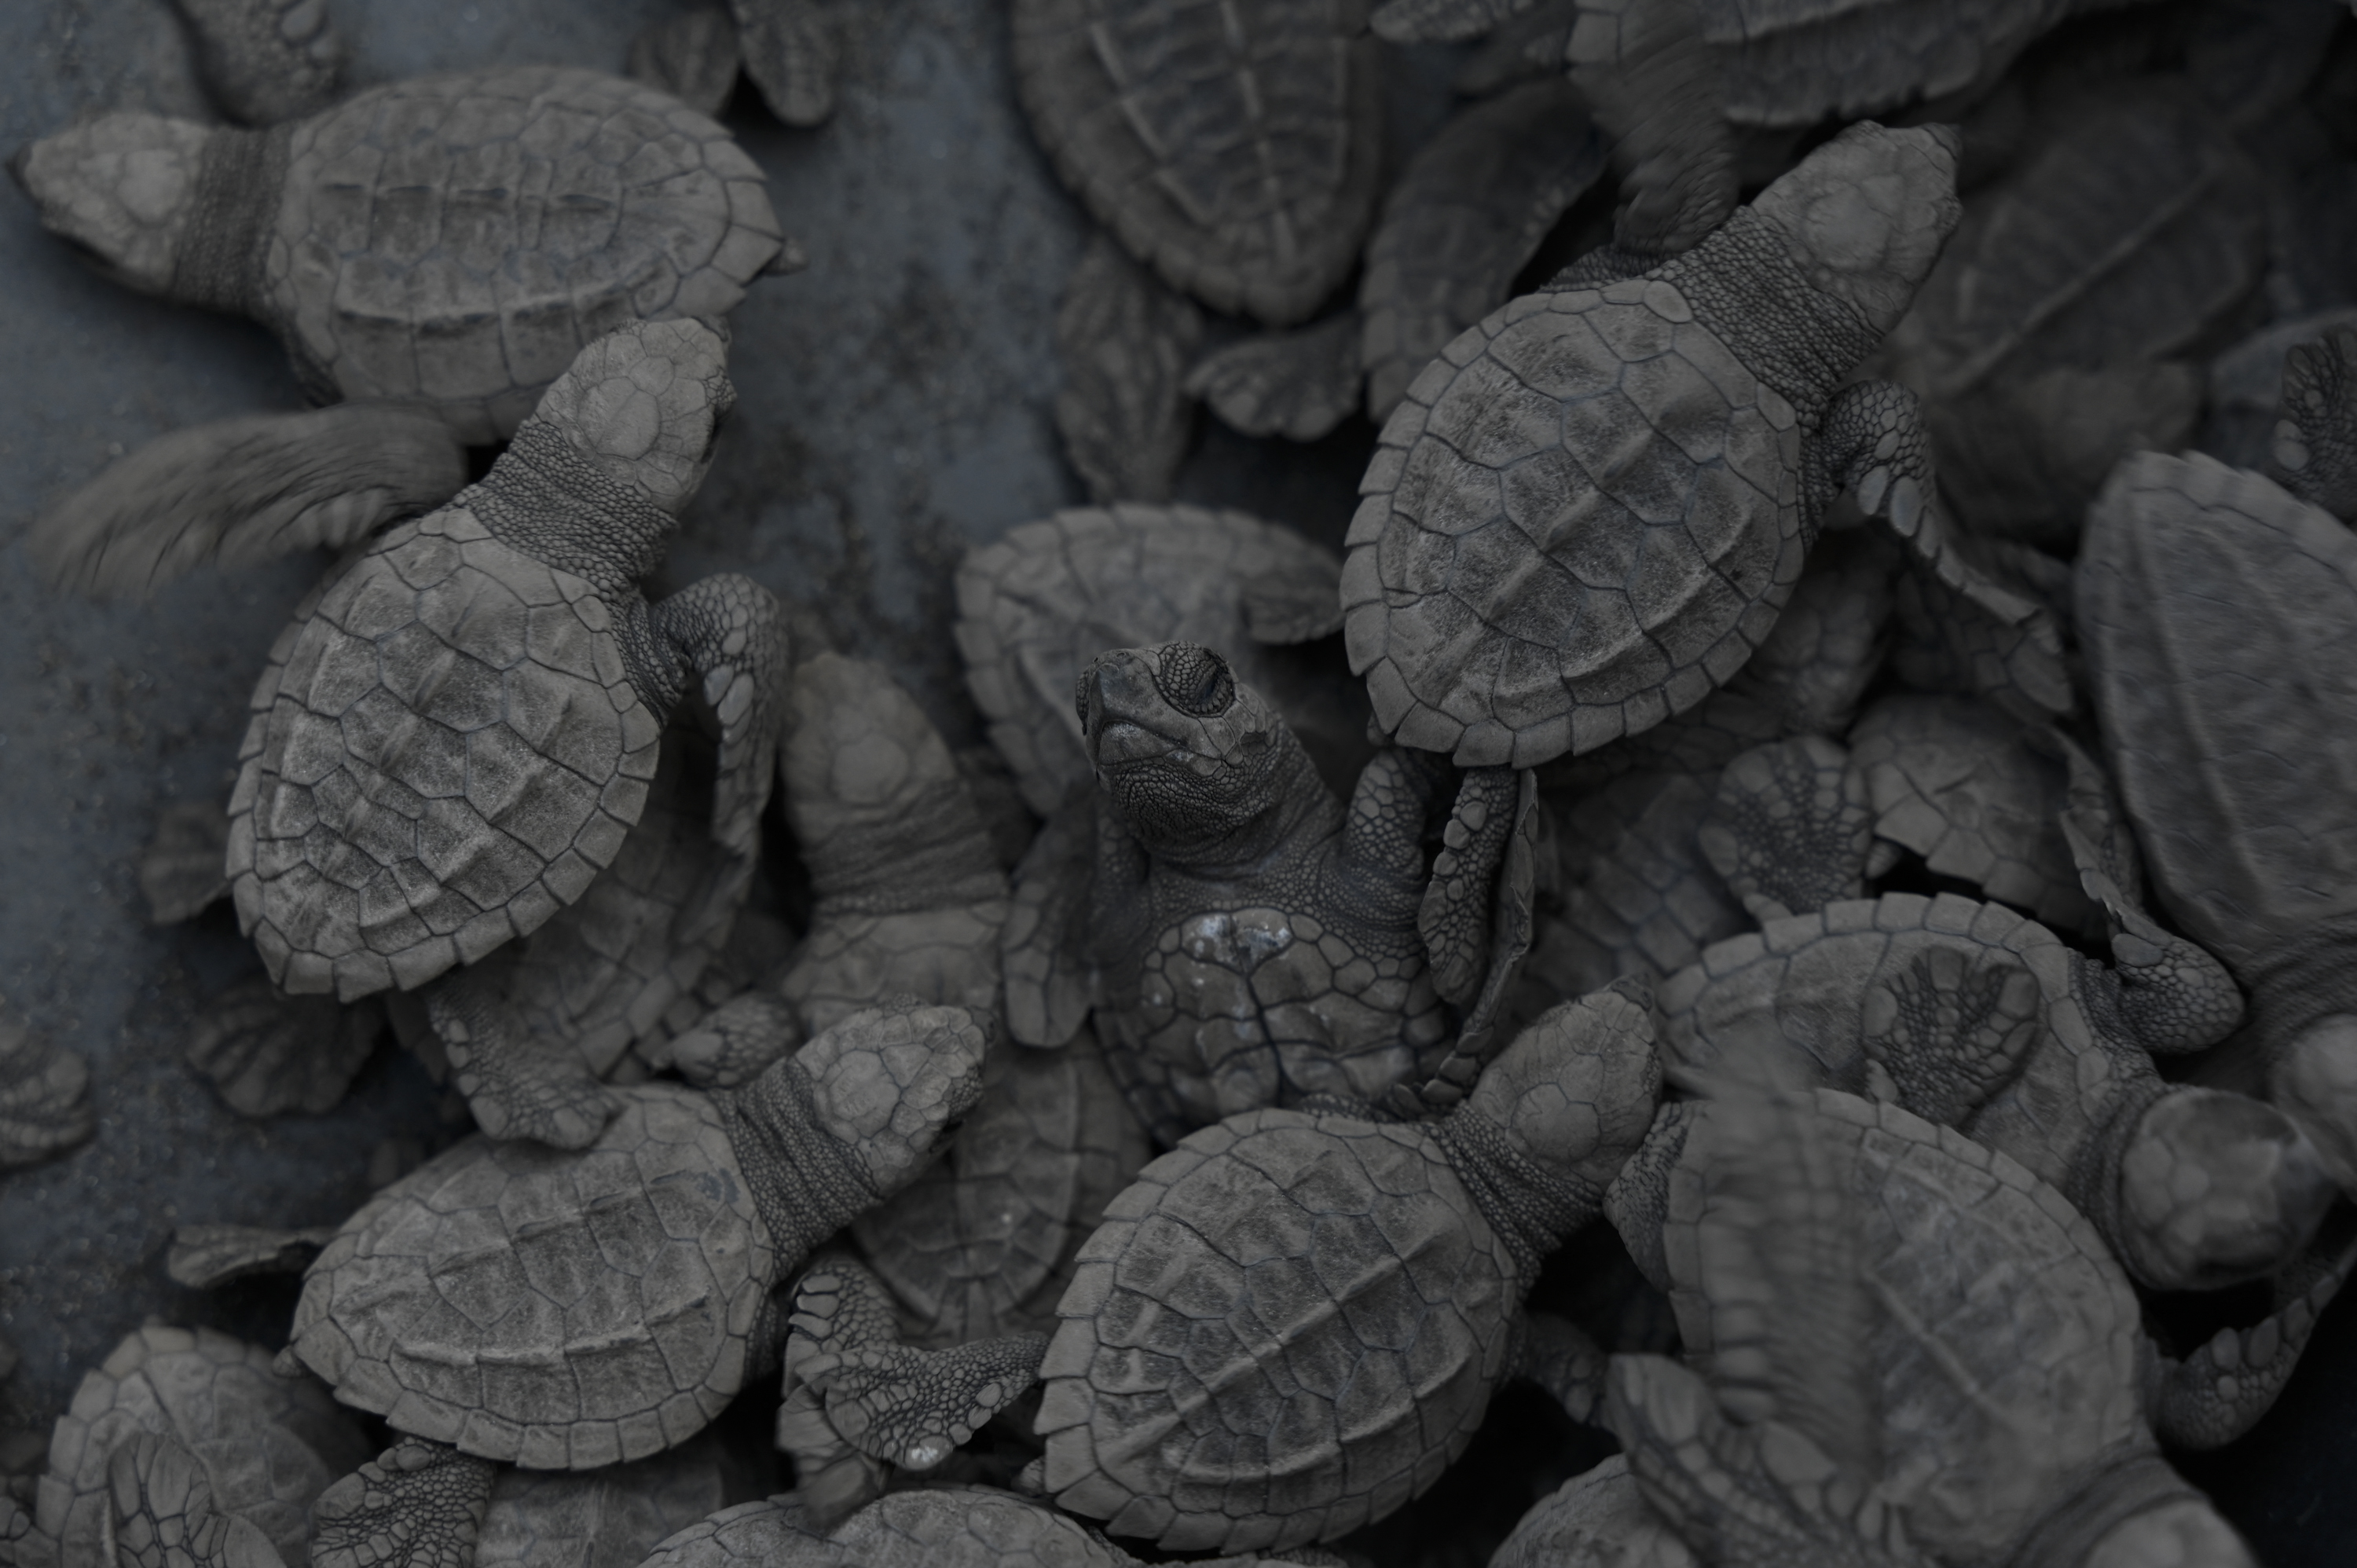 Black turtle hatchlings.